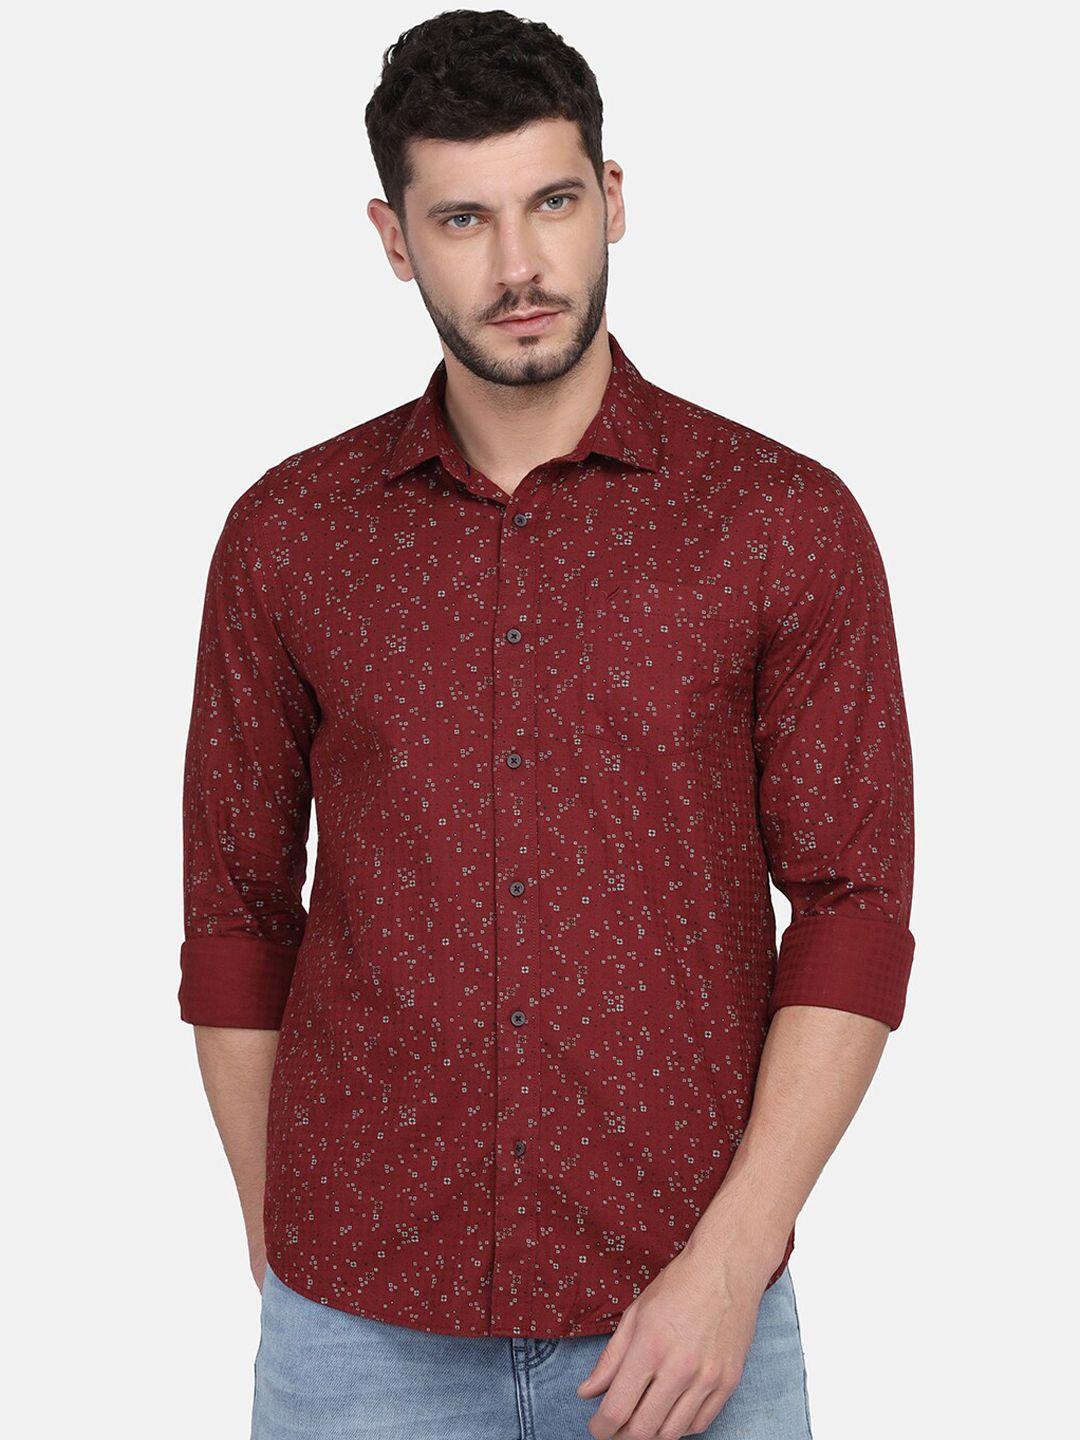 blackberrys-men-slim-fit-floral-printed-casual-cotton-shirt